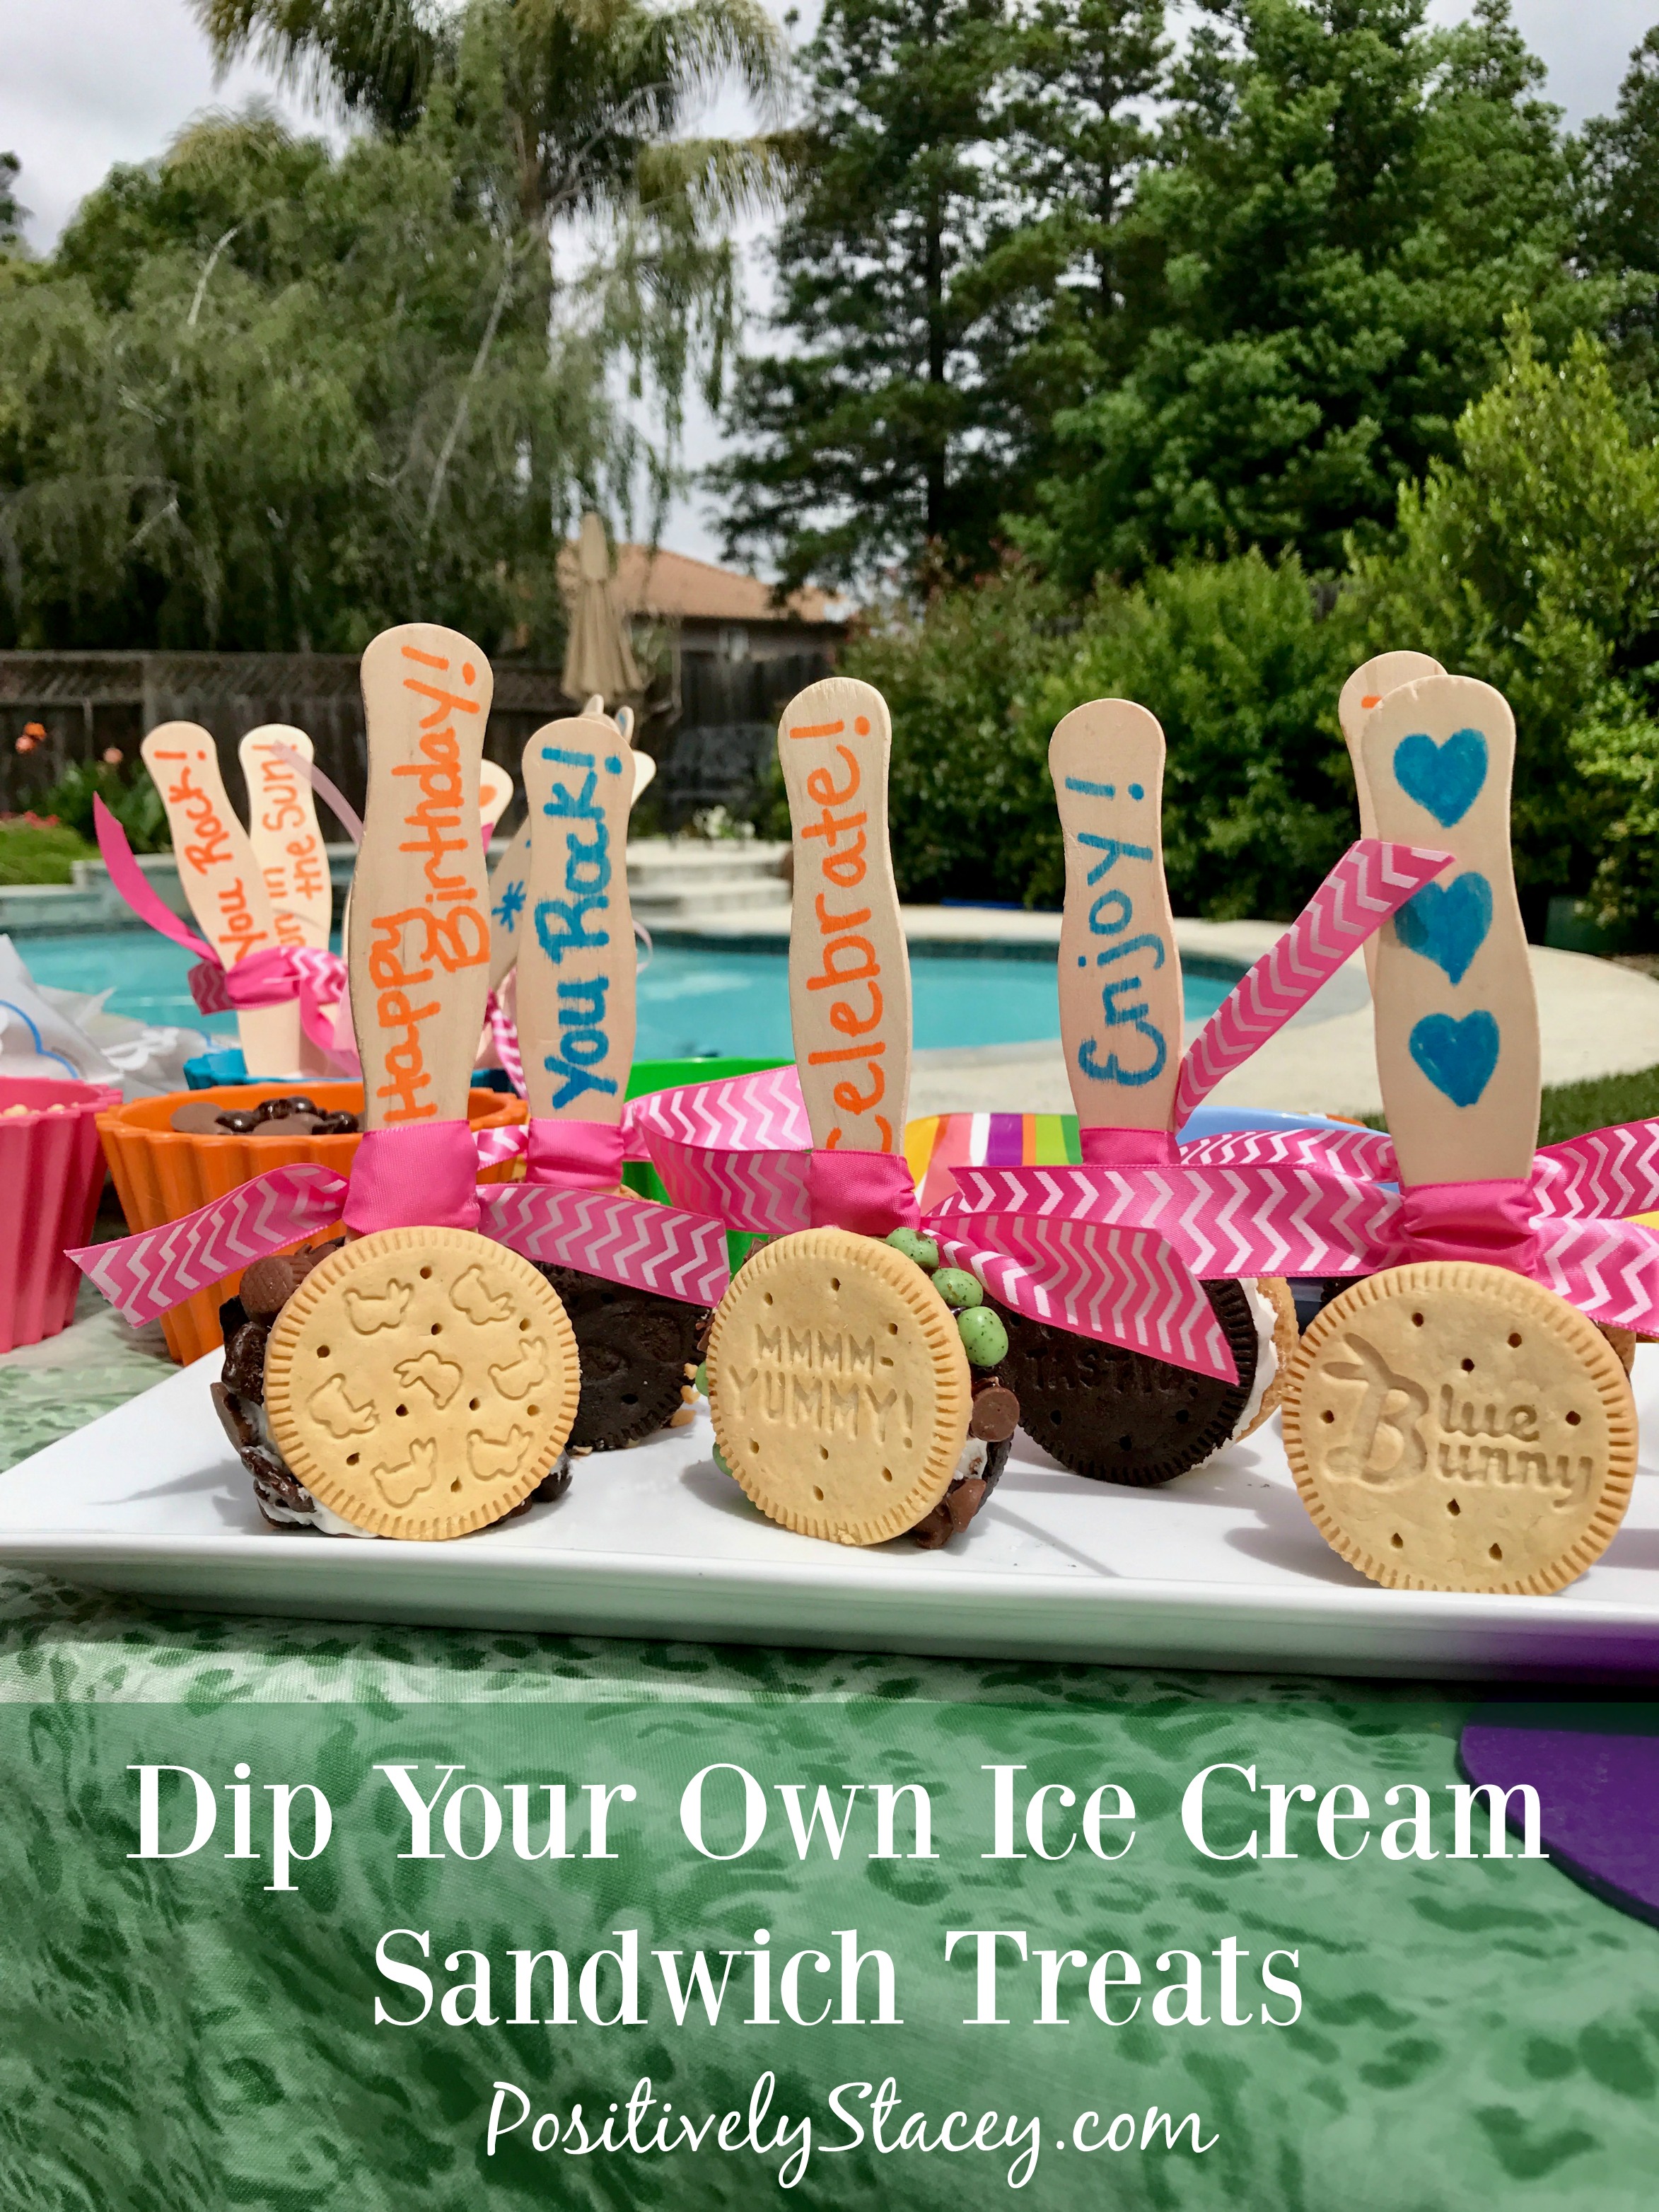 Dip Your Own Ice Cream Sandwich Treats